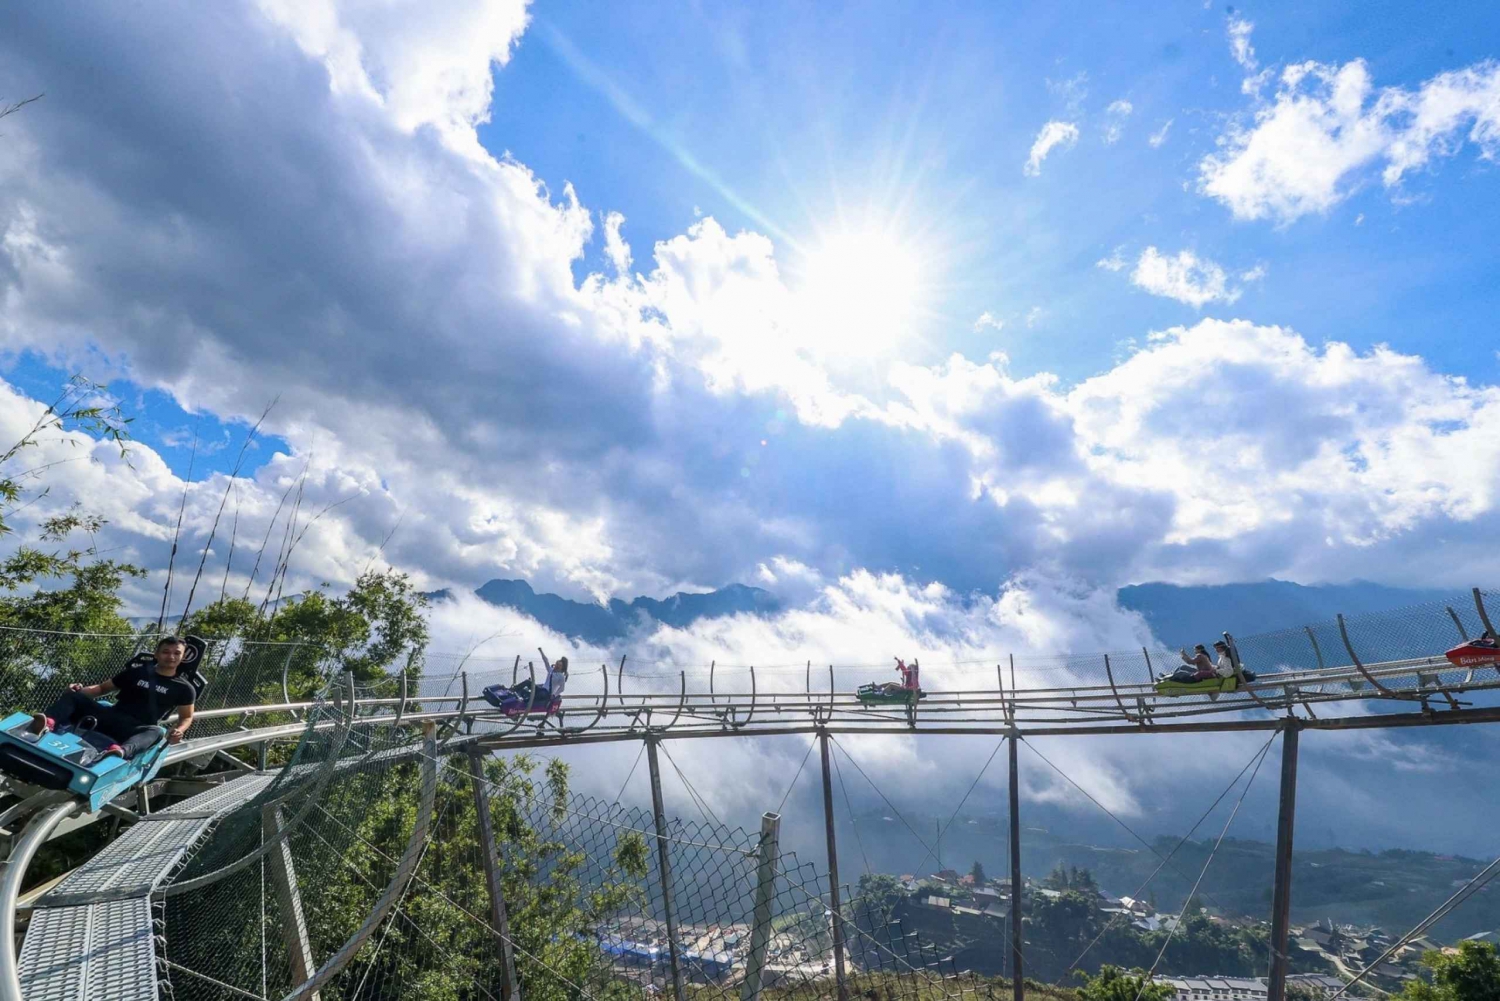 Alpine Coaster Ban Mong Experience in Sapa - Vietnam